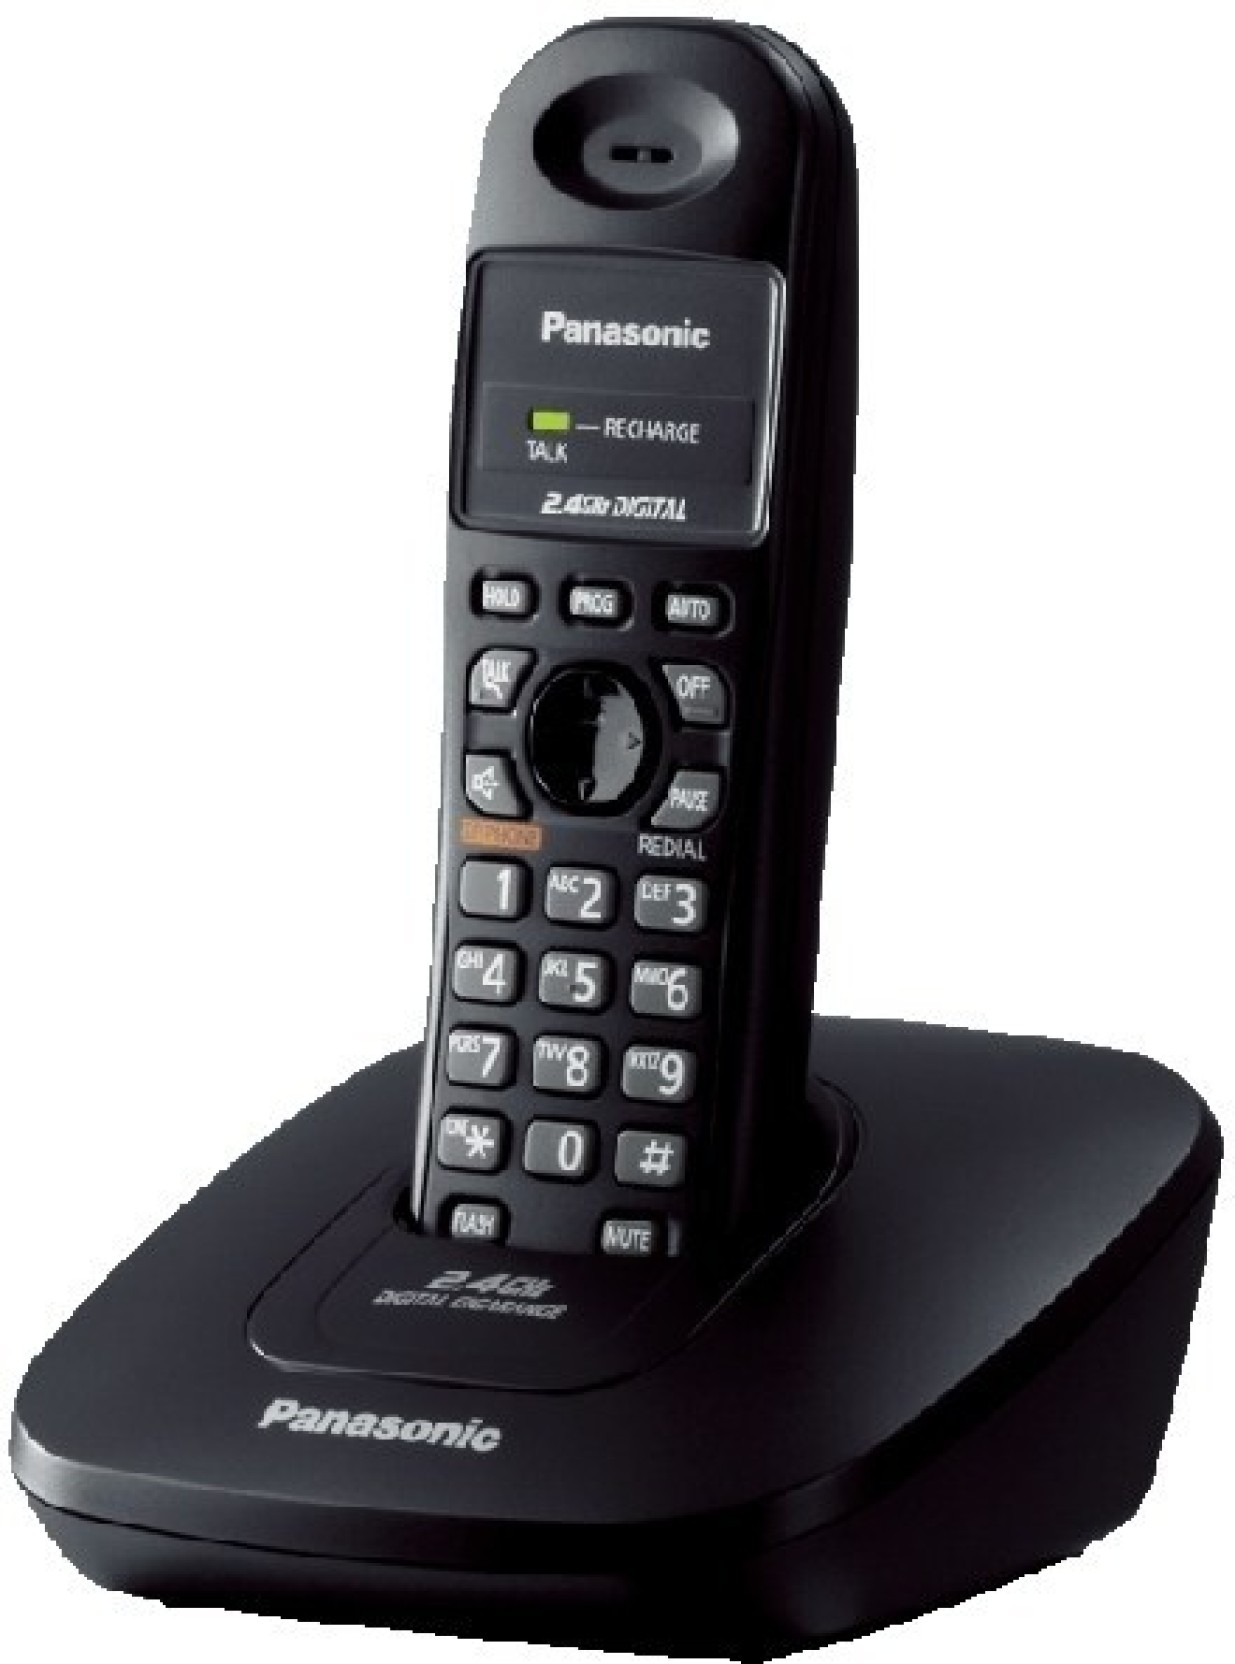 Panasonic KX-TG3600SX Cordless Landline Phone Price in India - Buy